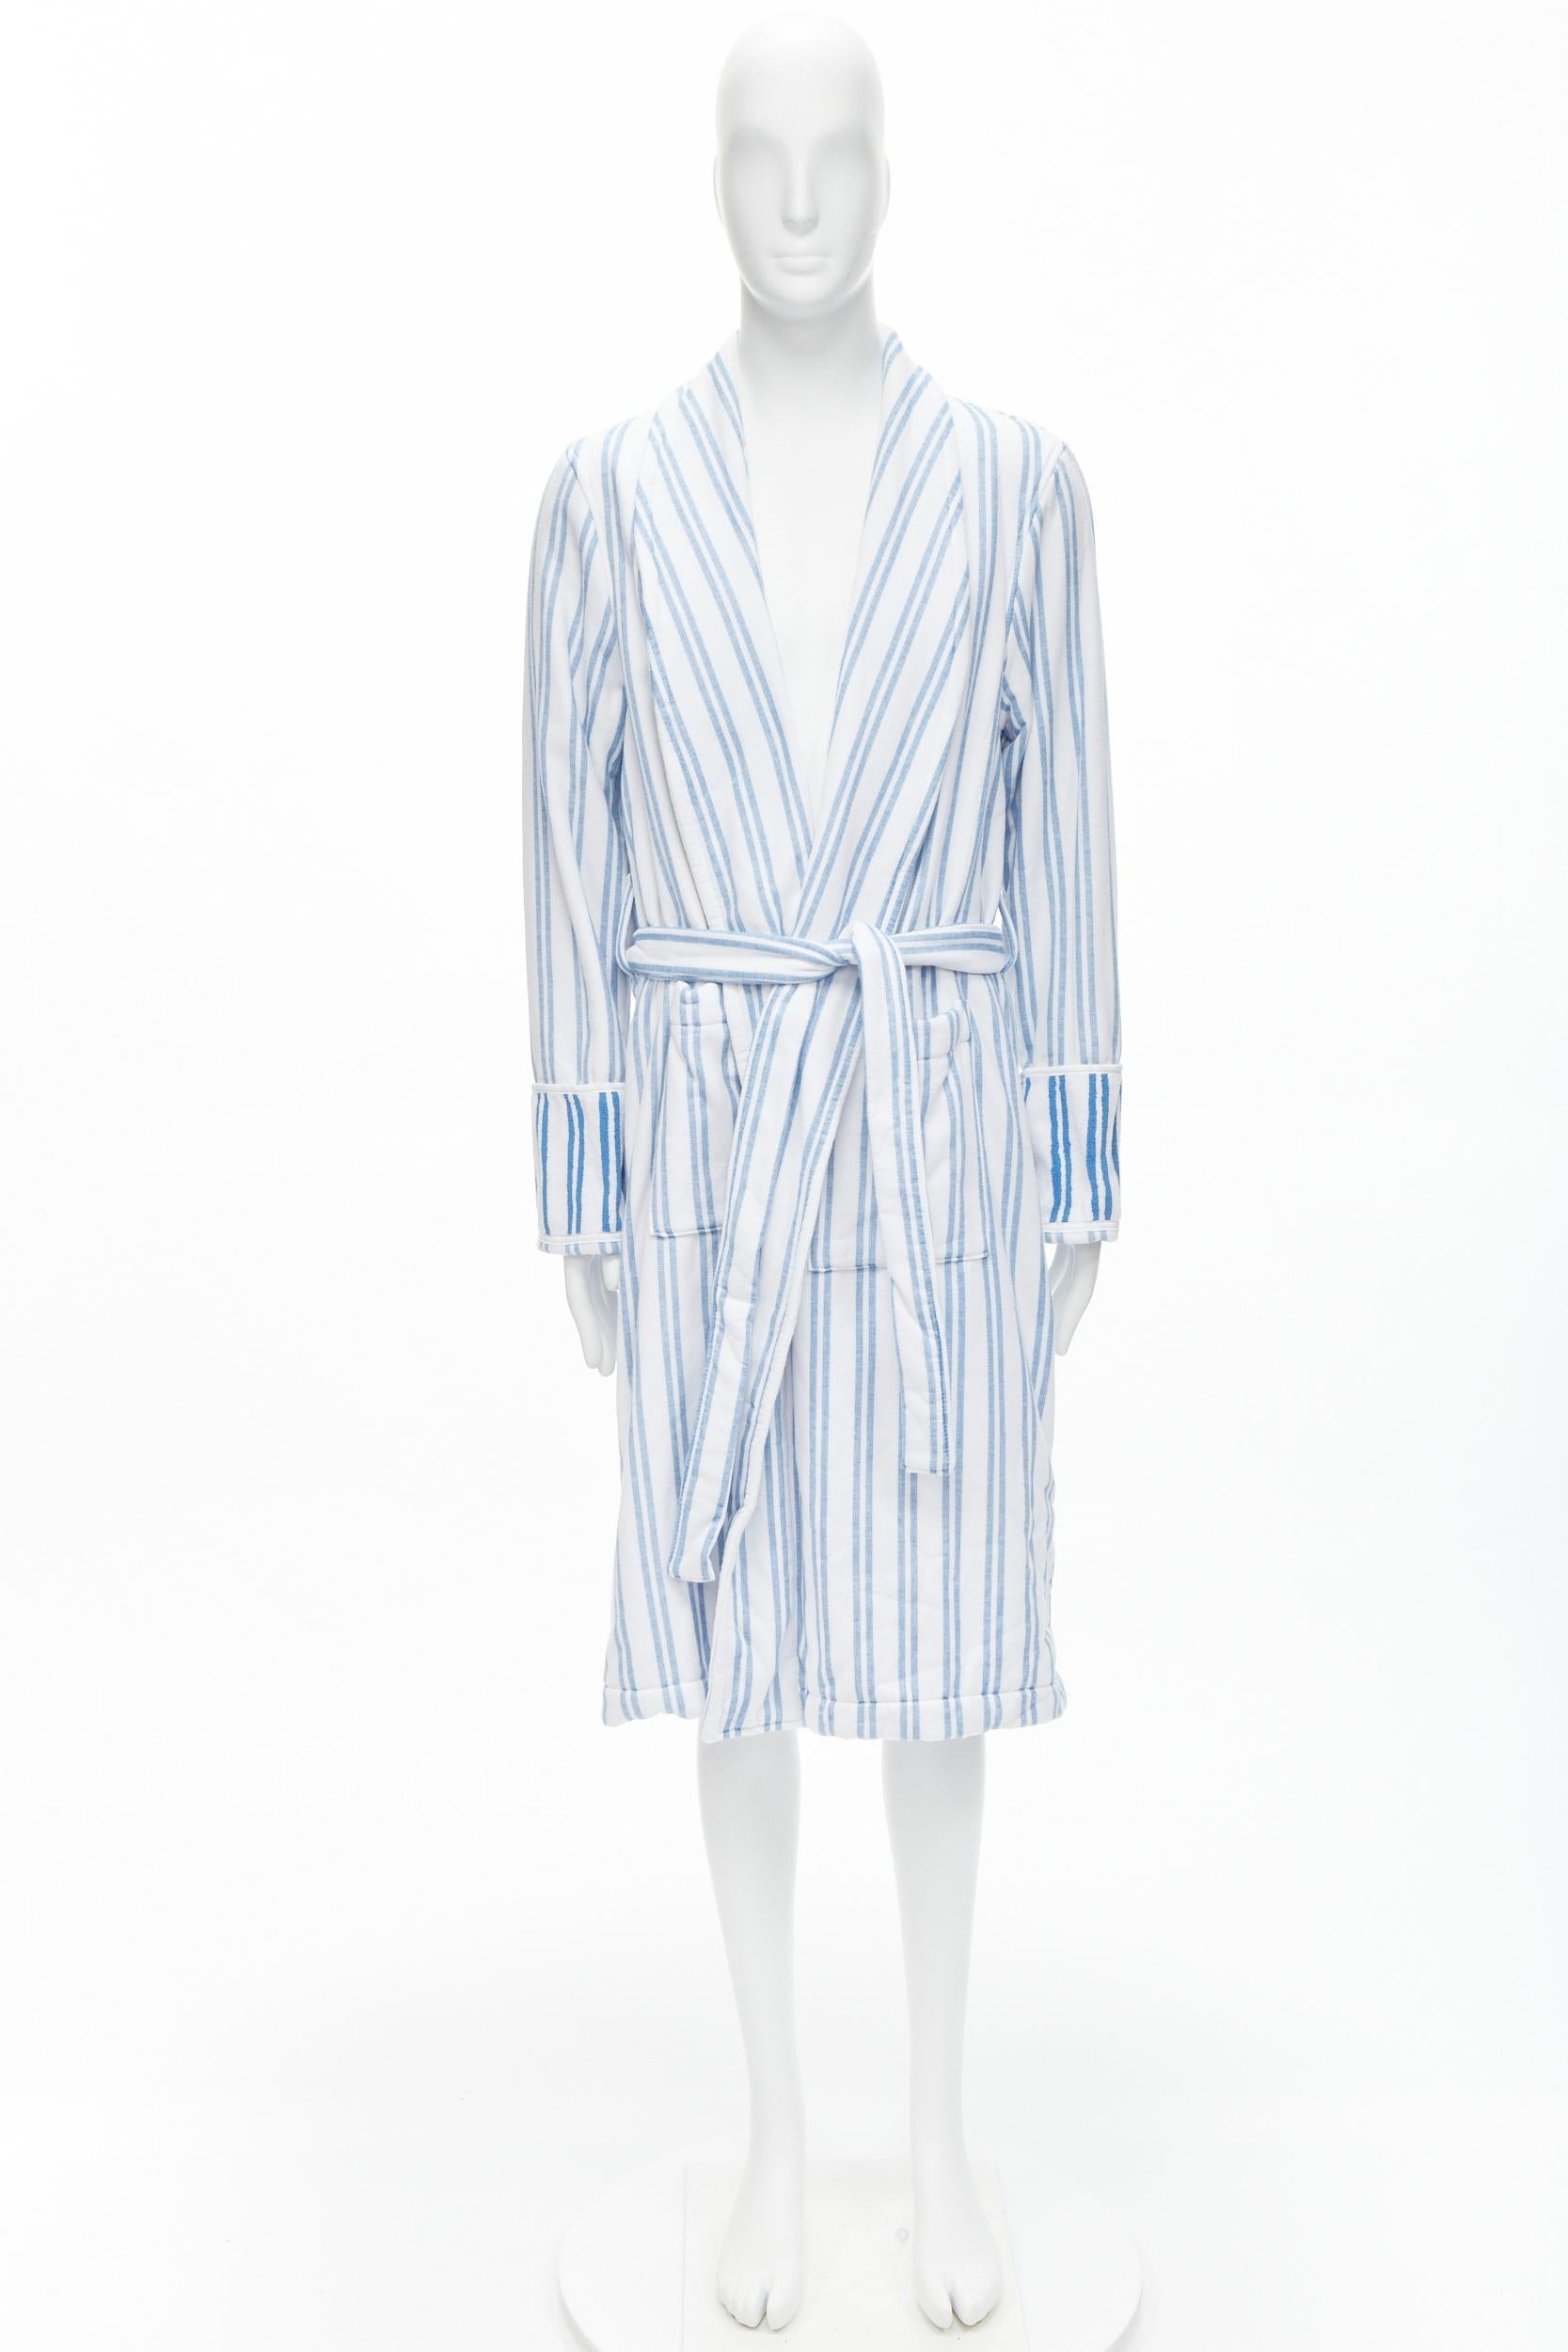 BALENCIAGA Demna Resort blue white striped belted bathrobe coat FR42 L Rihanna 2